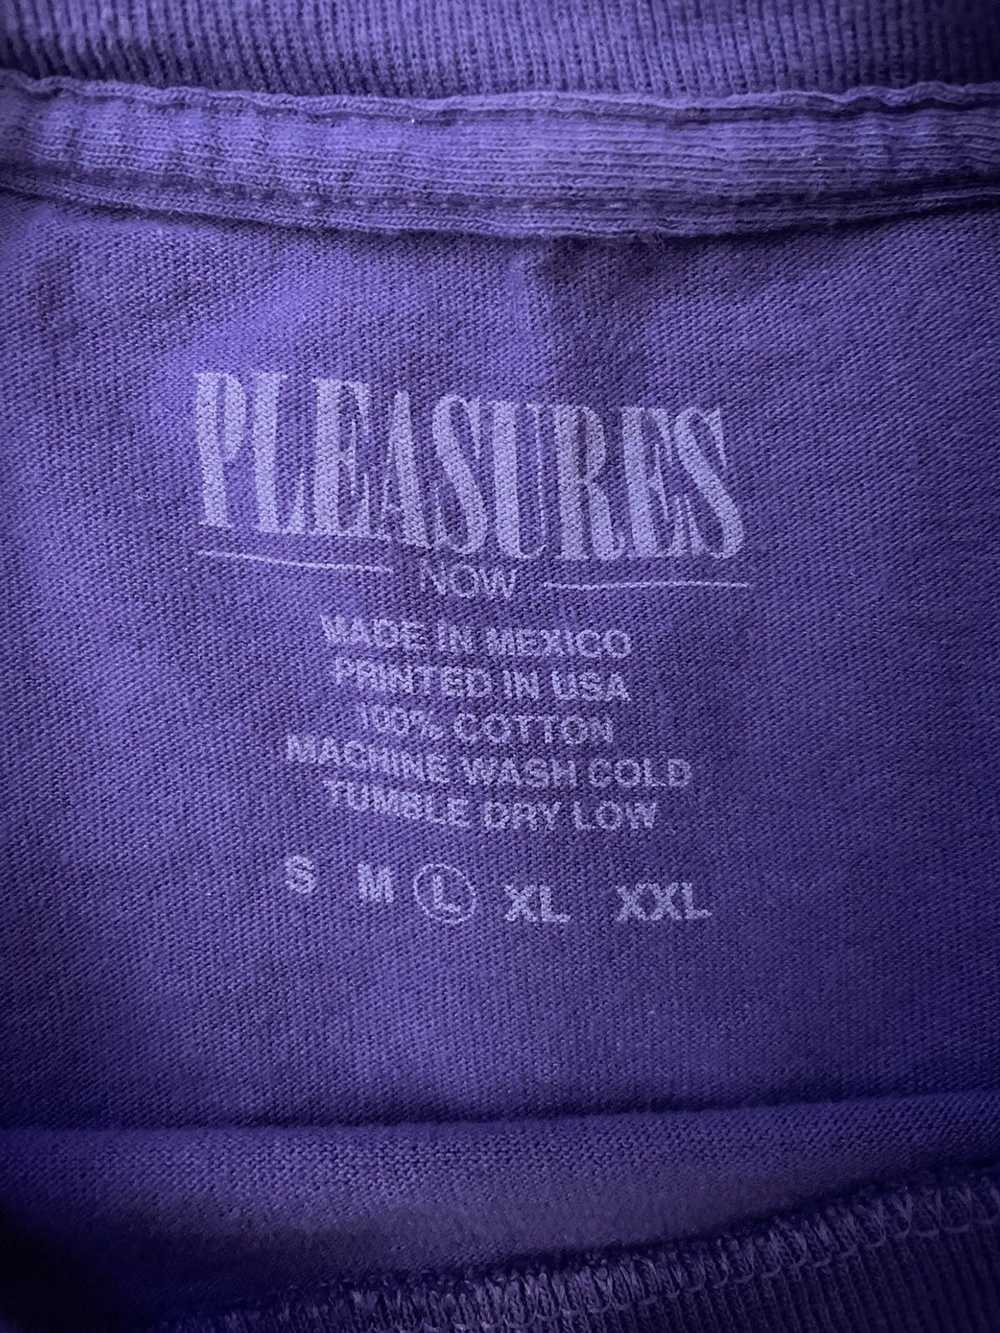 Pleasures Pleasures tee - image 3